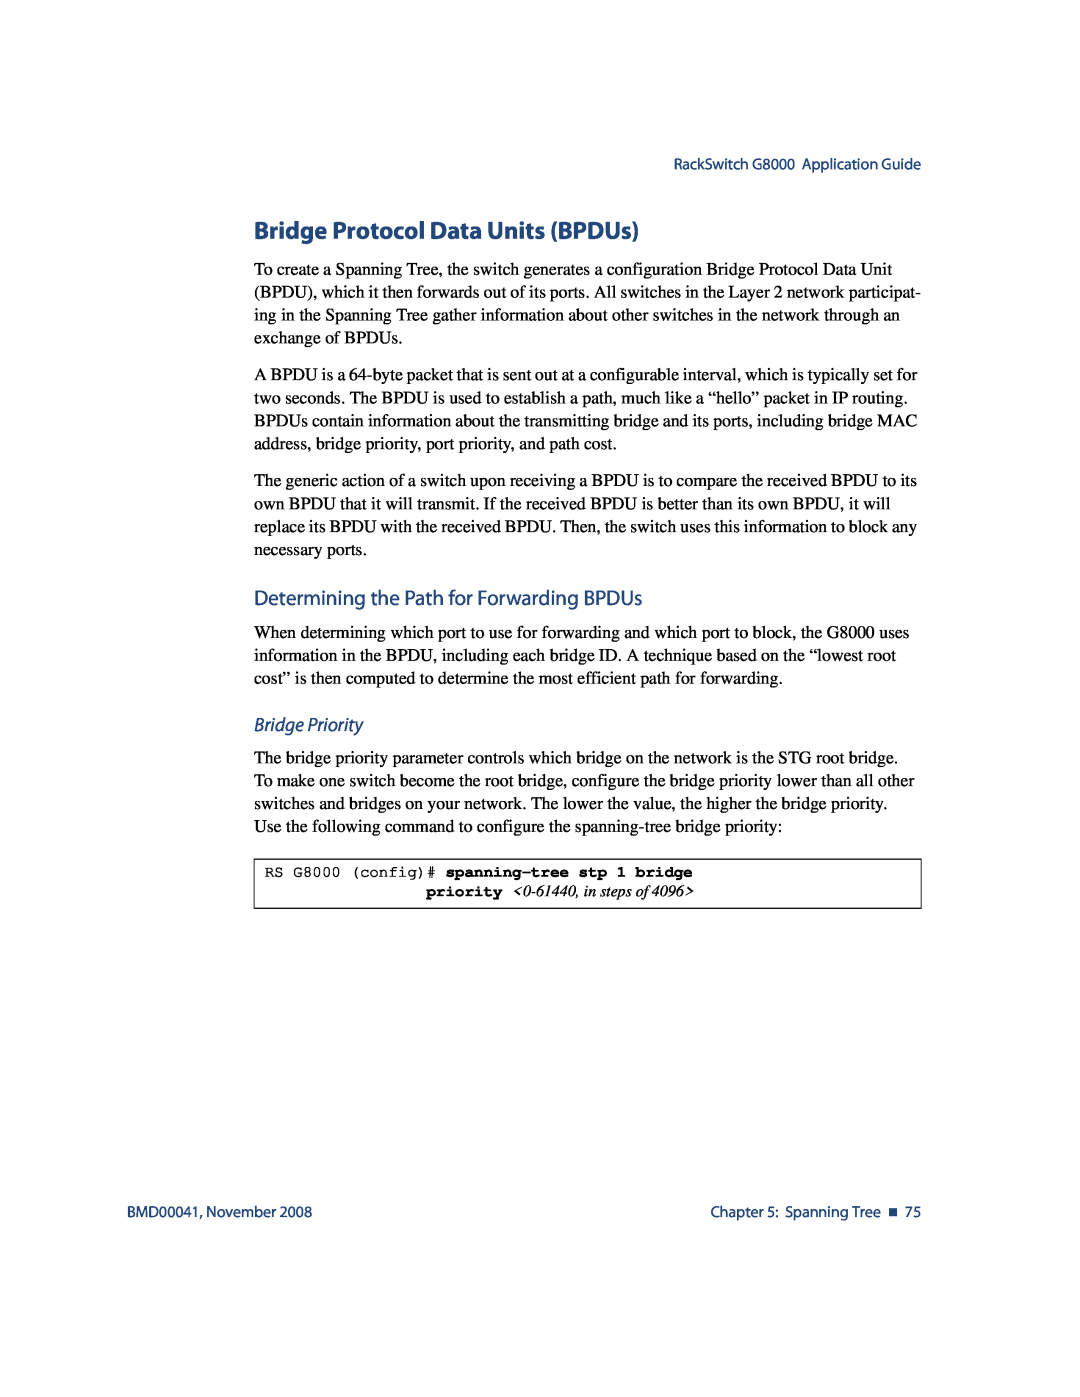 Blade ICE G8000 manual Bridge Protocol Data Units BPDUs, Determining the Path for Forwarding BPDUs, Bridge Priority 